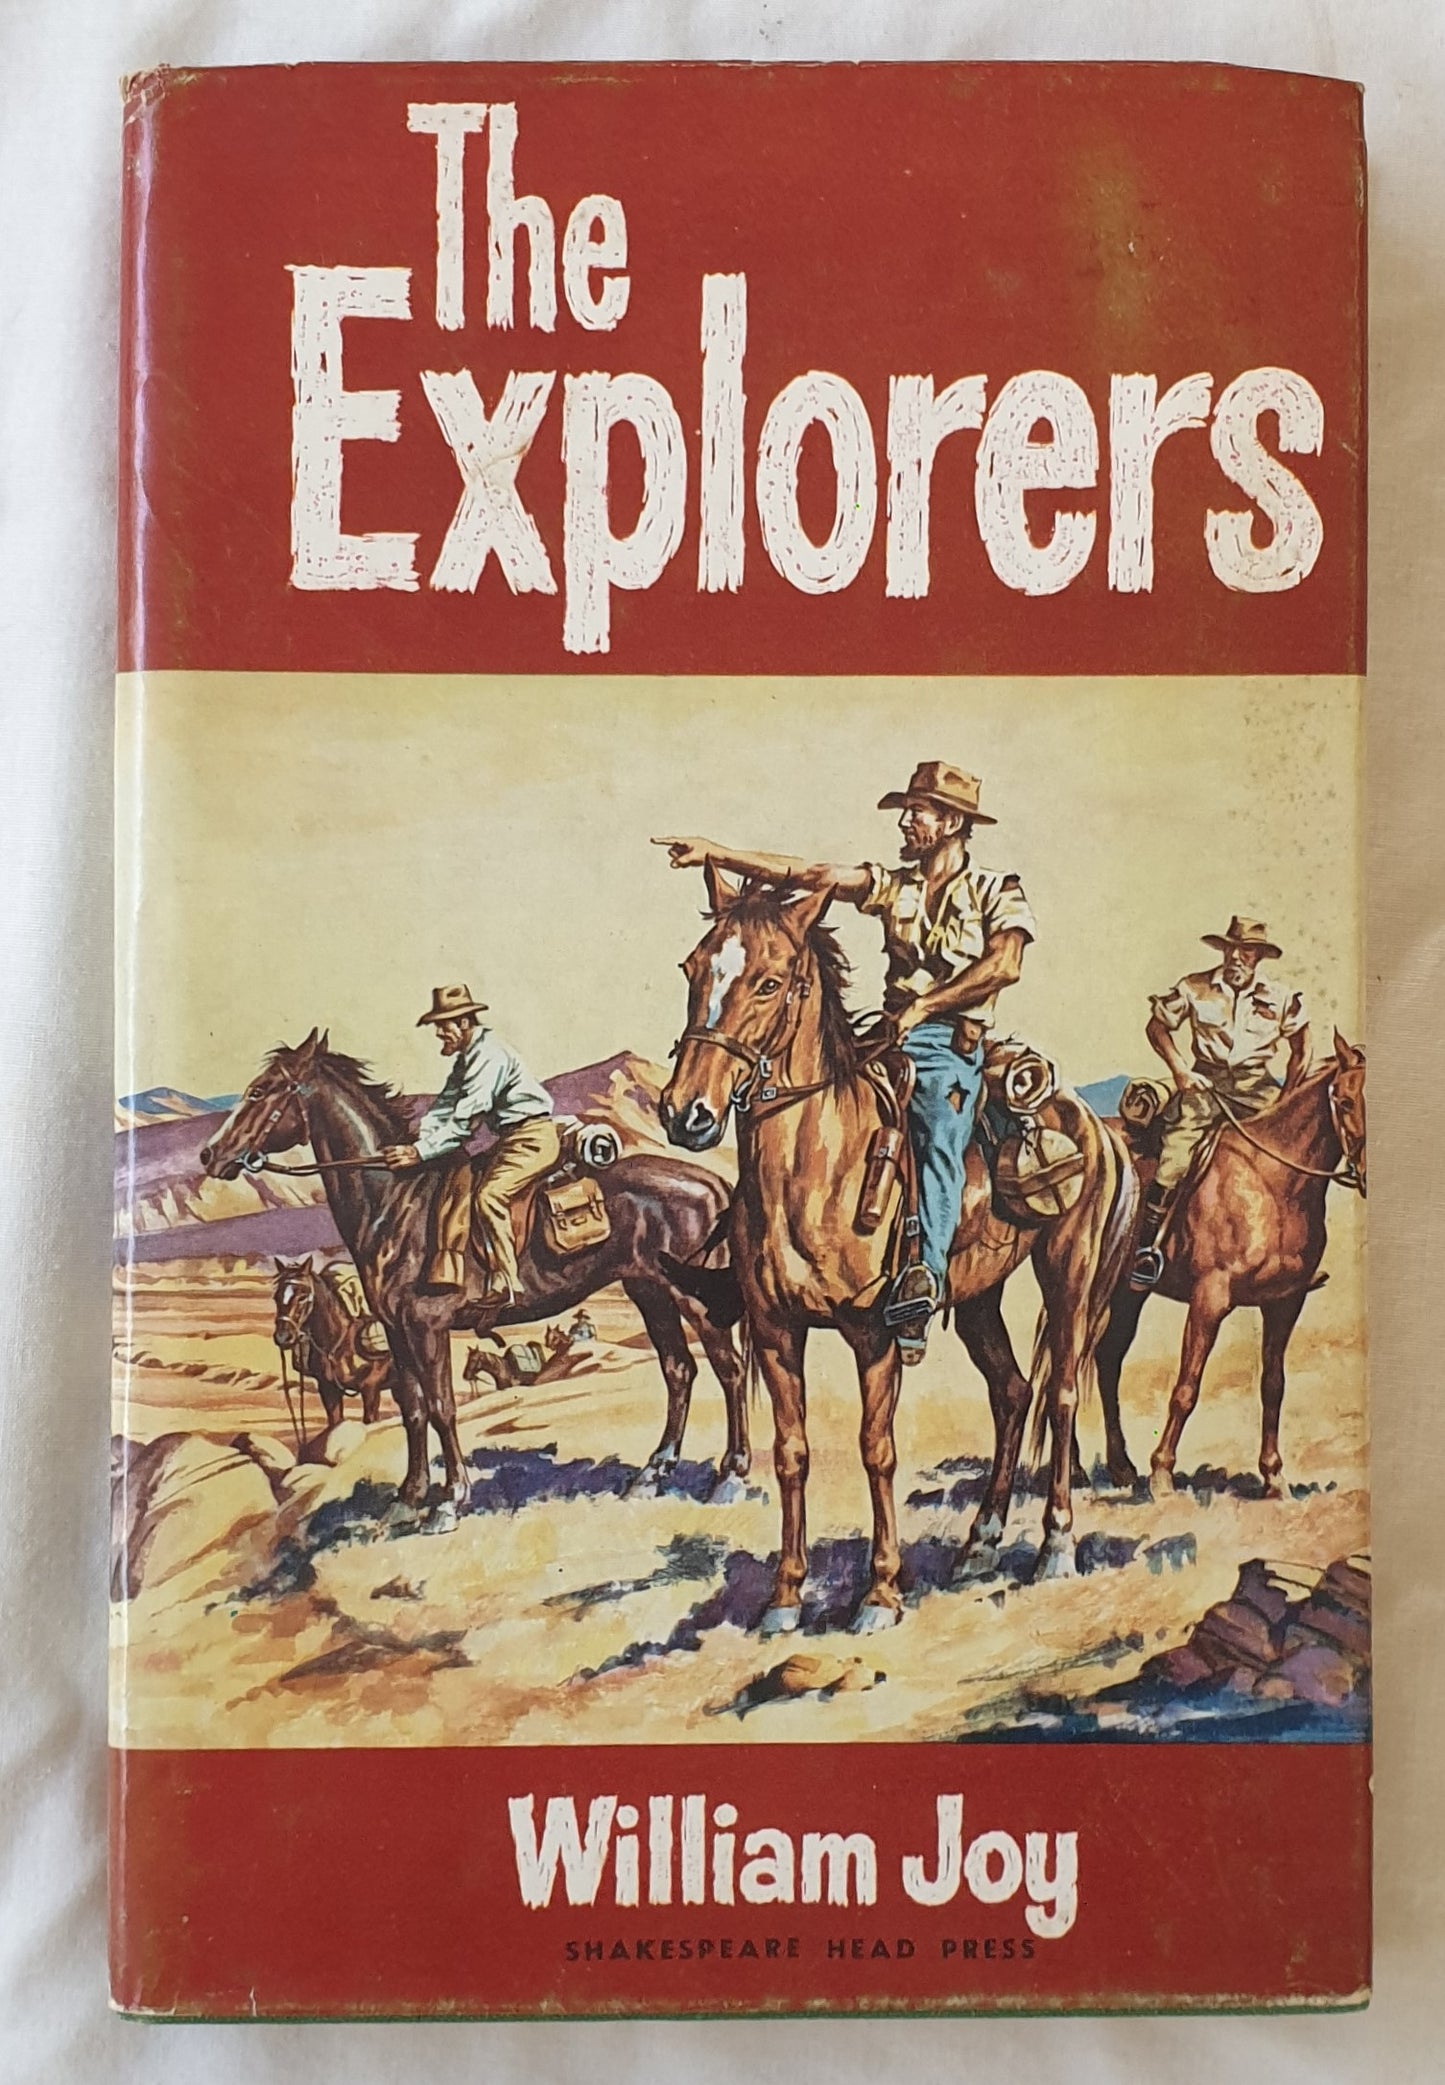 The Explorers by William Joy